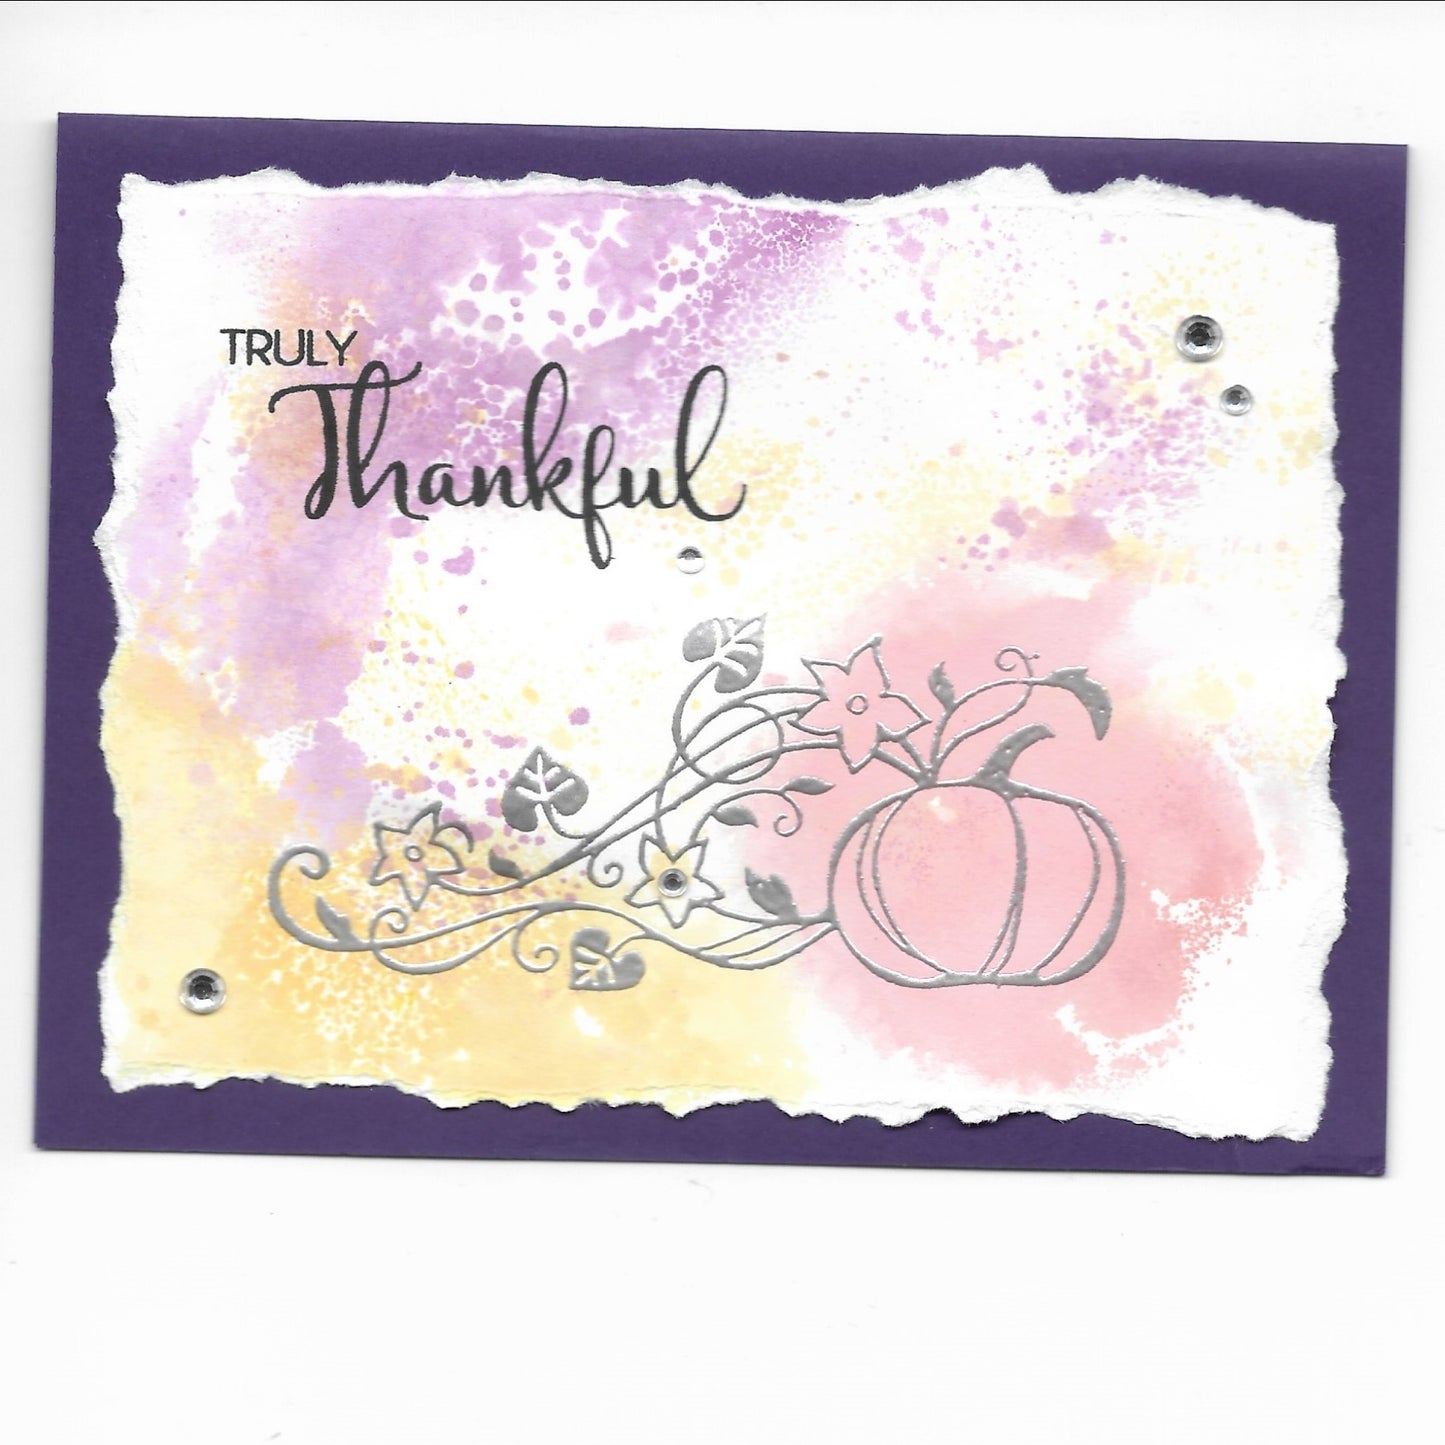 Greeting Cards, Thanksgiving